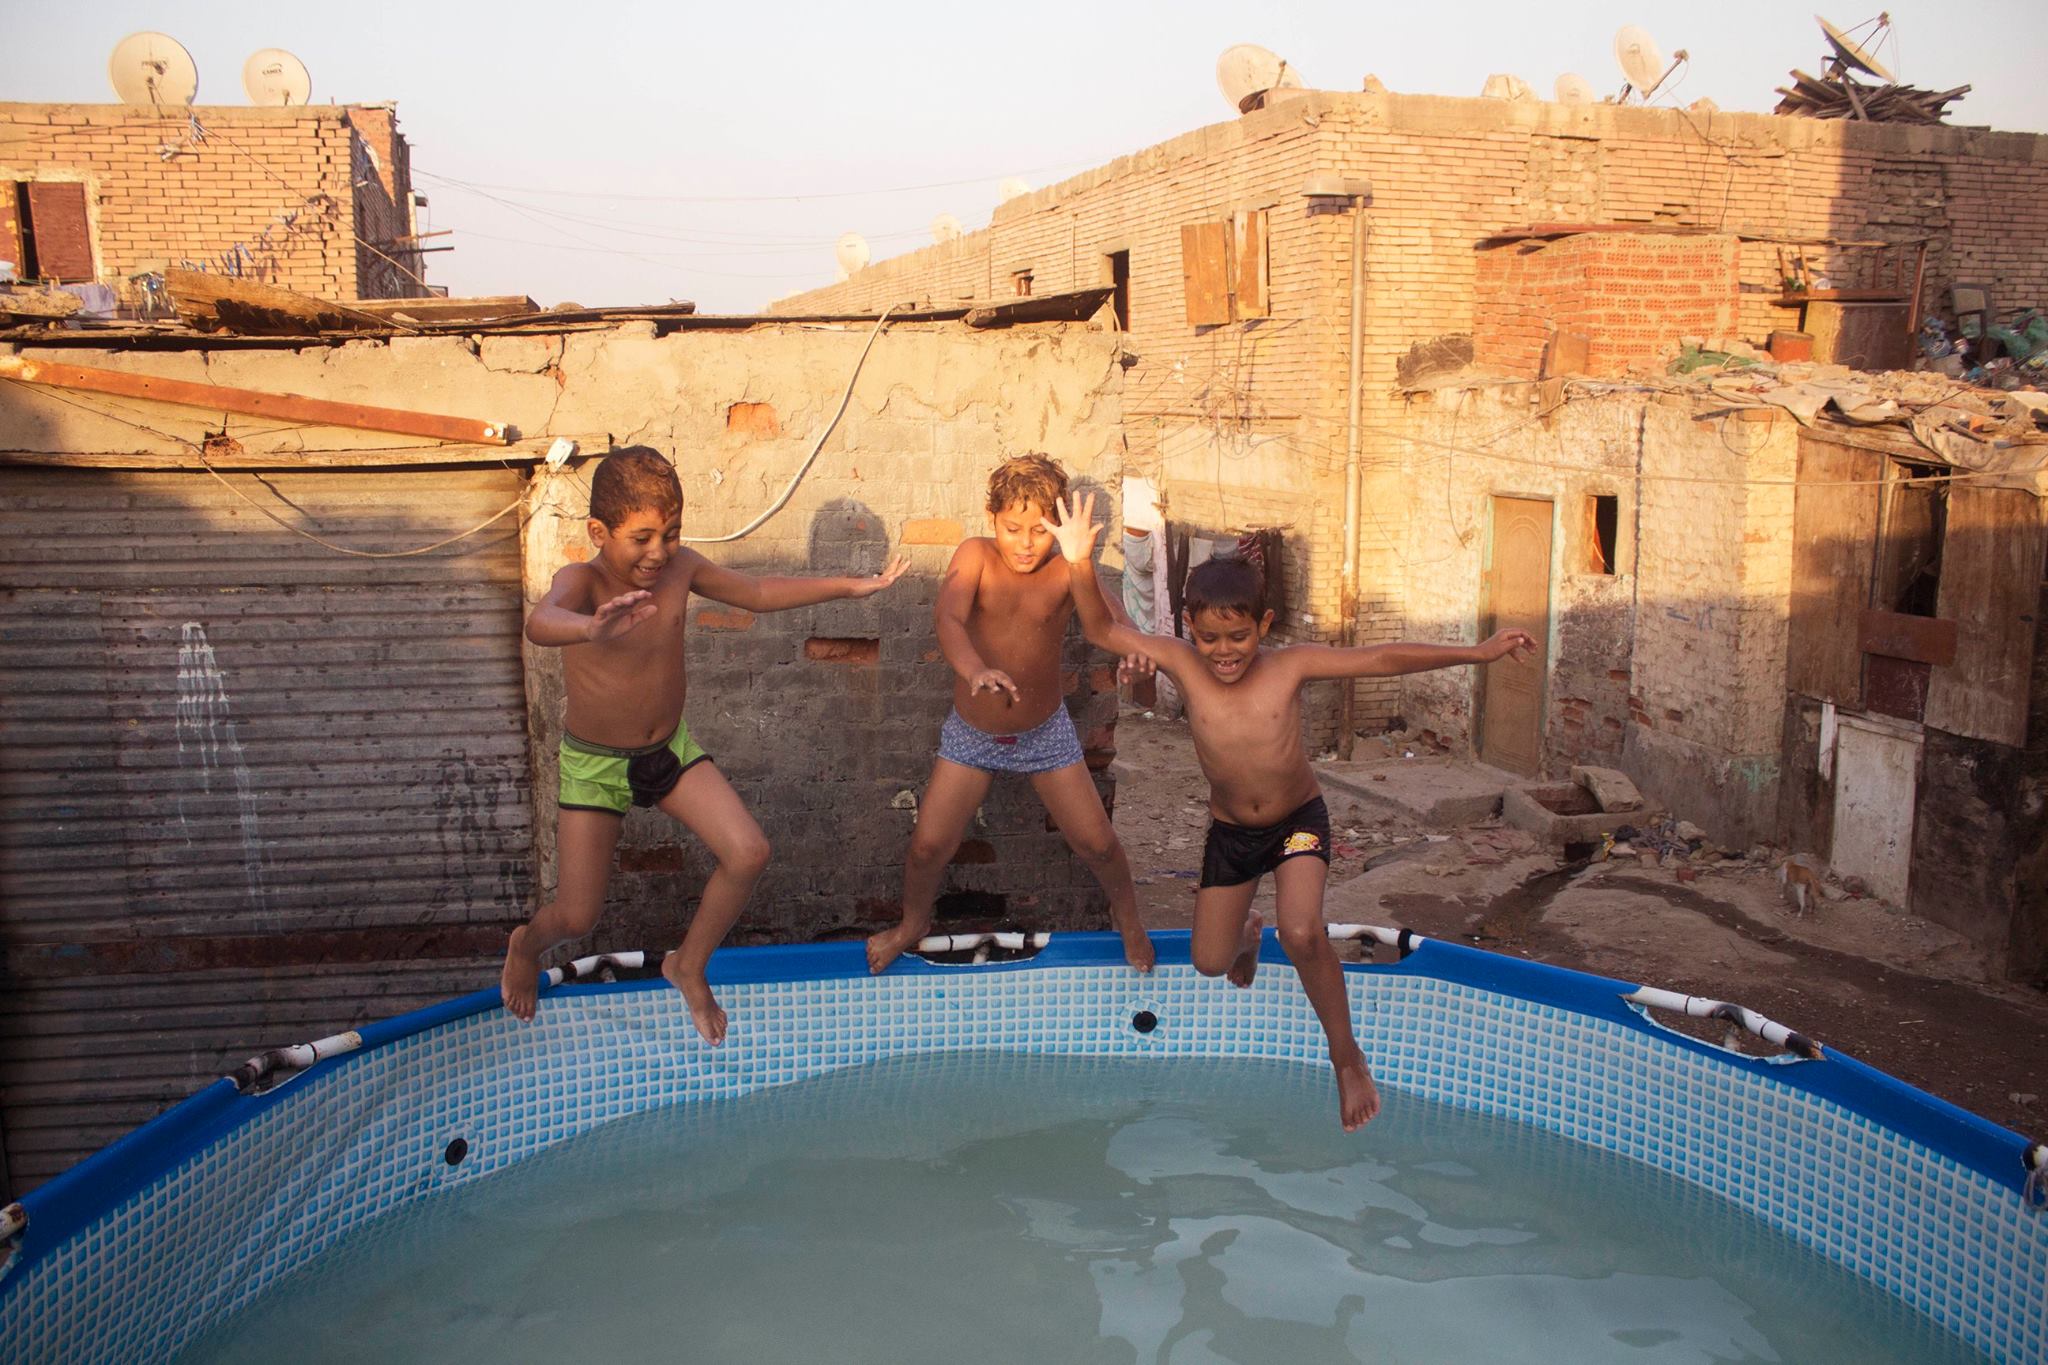 Children jumping in a 'public swimming pool' in Dwayka, Cairo.  Credit: Mostafa Darwish